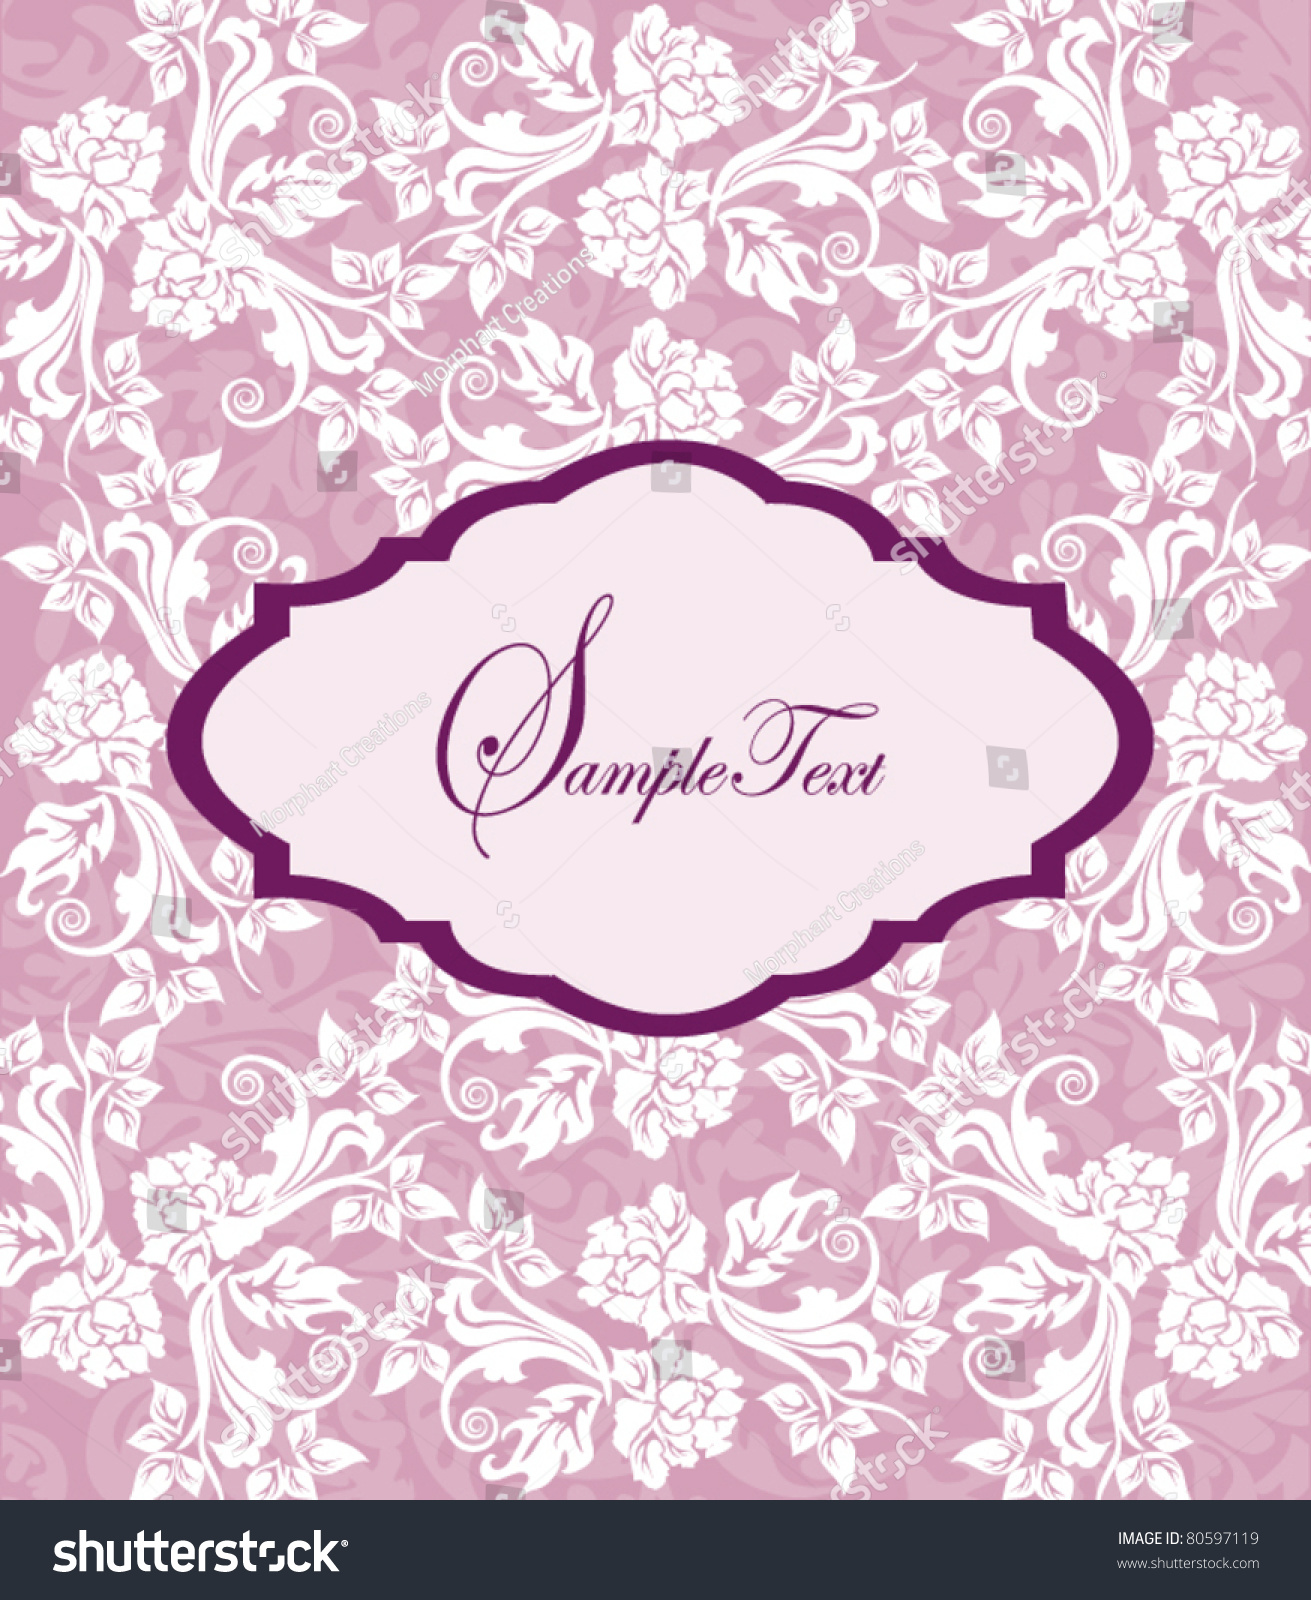 Invitation Card On Pink Floral Background Stock Vector Illustration